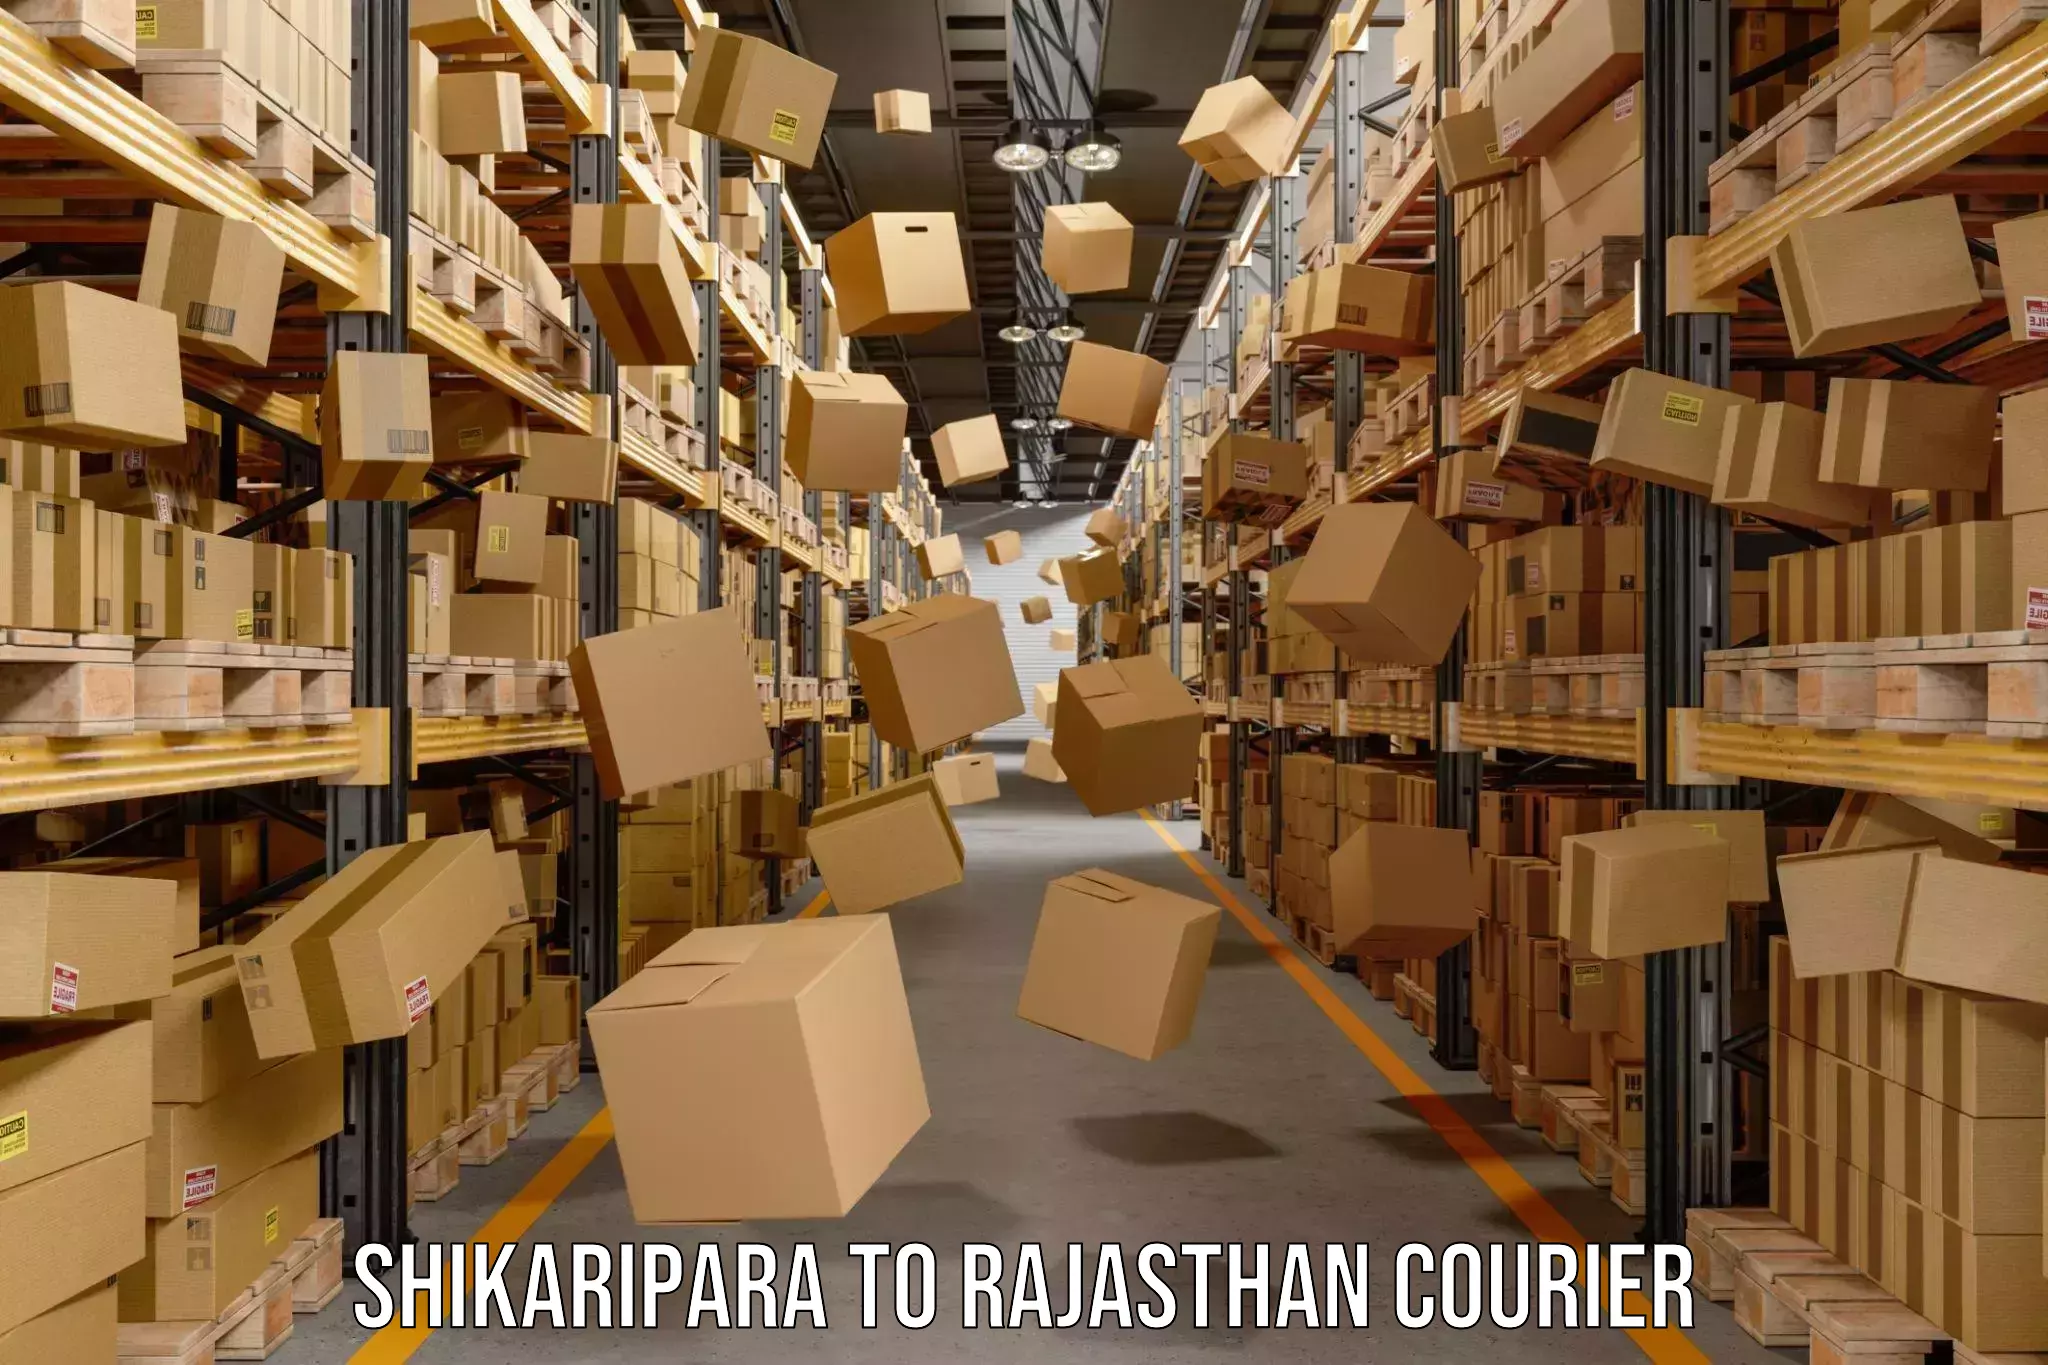 Courier service innovation Shikaripara to Pokhran